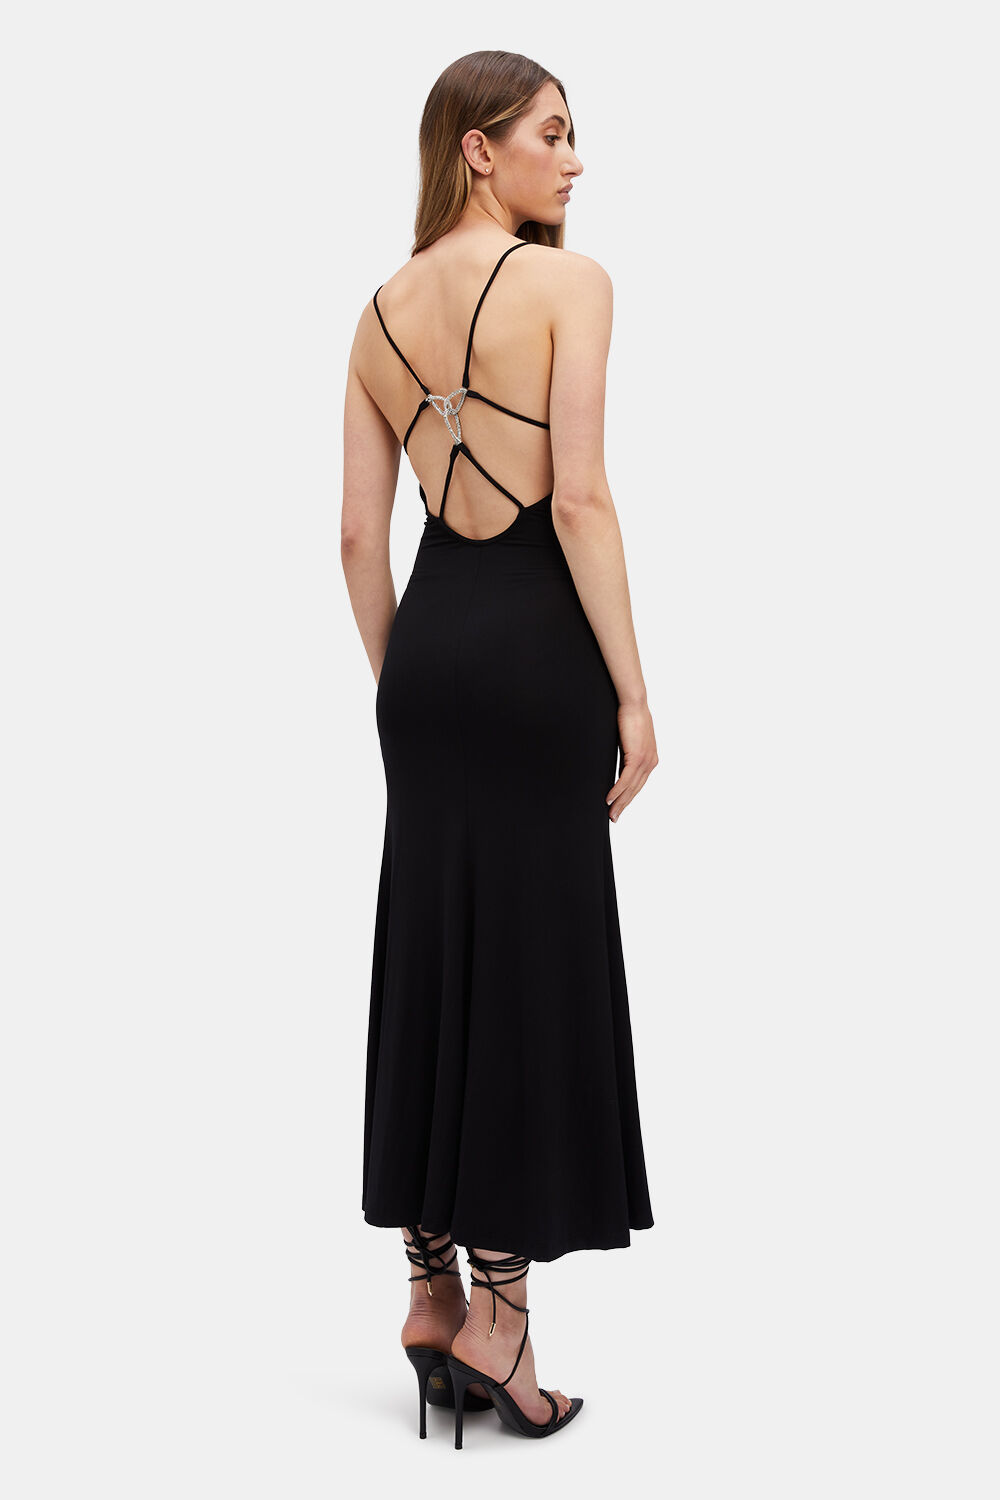 Victoire Diamonte Dress in Black | Bardot